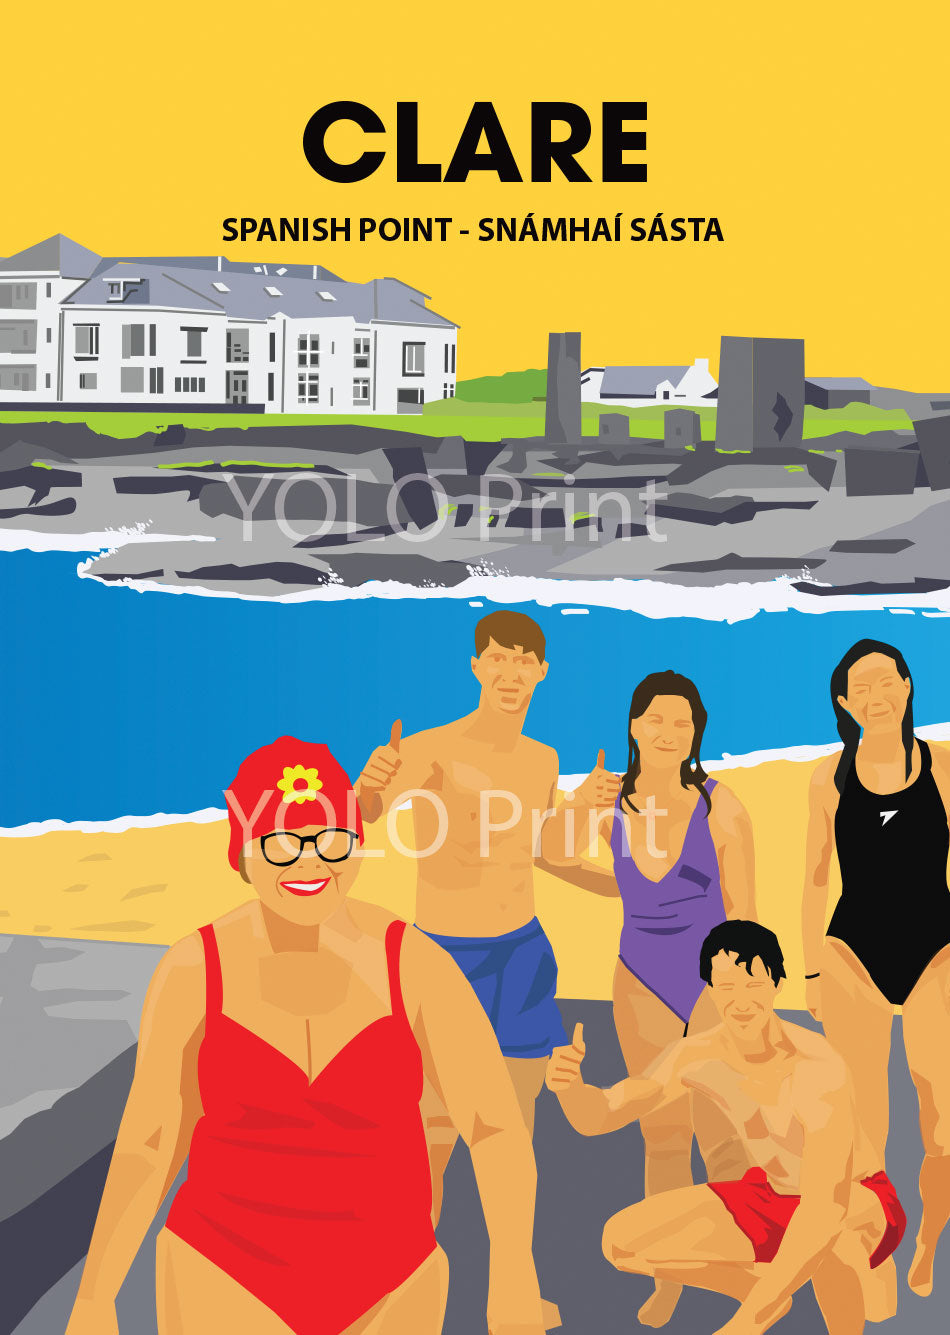 Clare Postcard or A4 Mounted Print  - Snamhai Sasta, Spanish Point